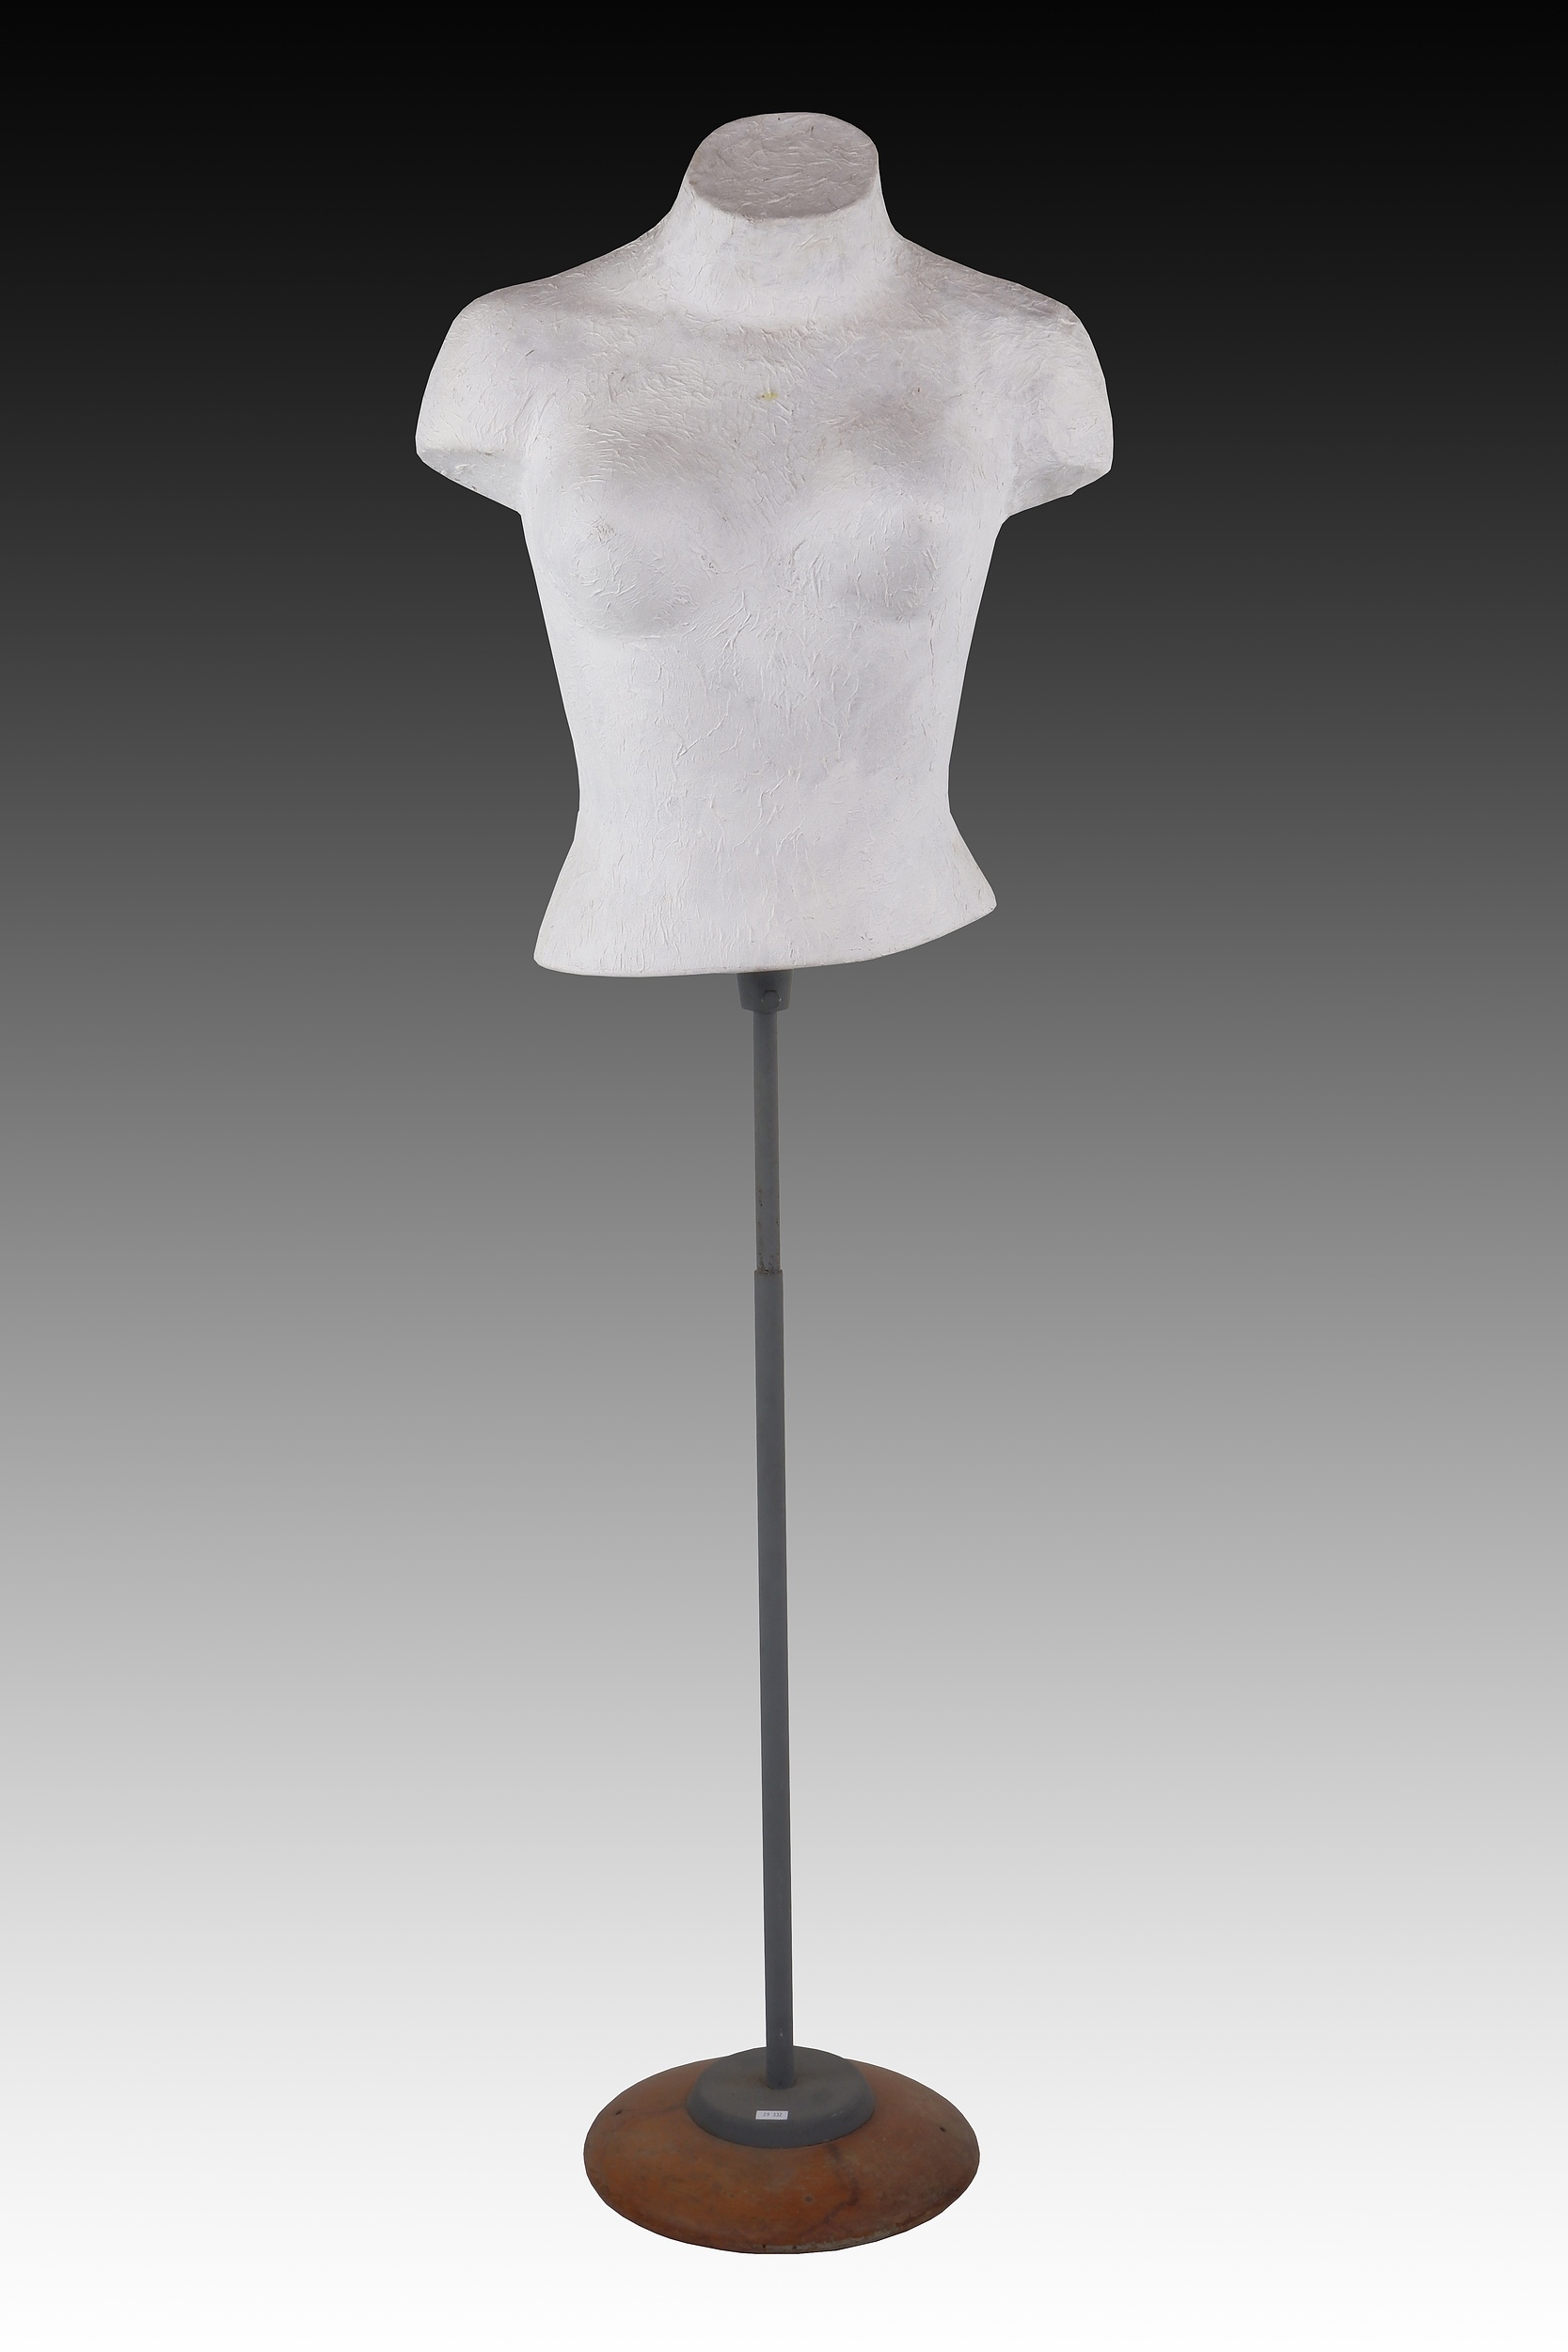 'Vintage Painted Plaster Female Torso Dress Form'